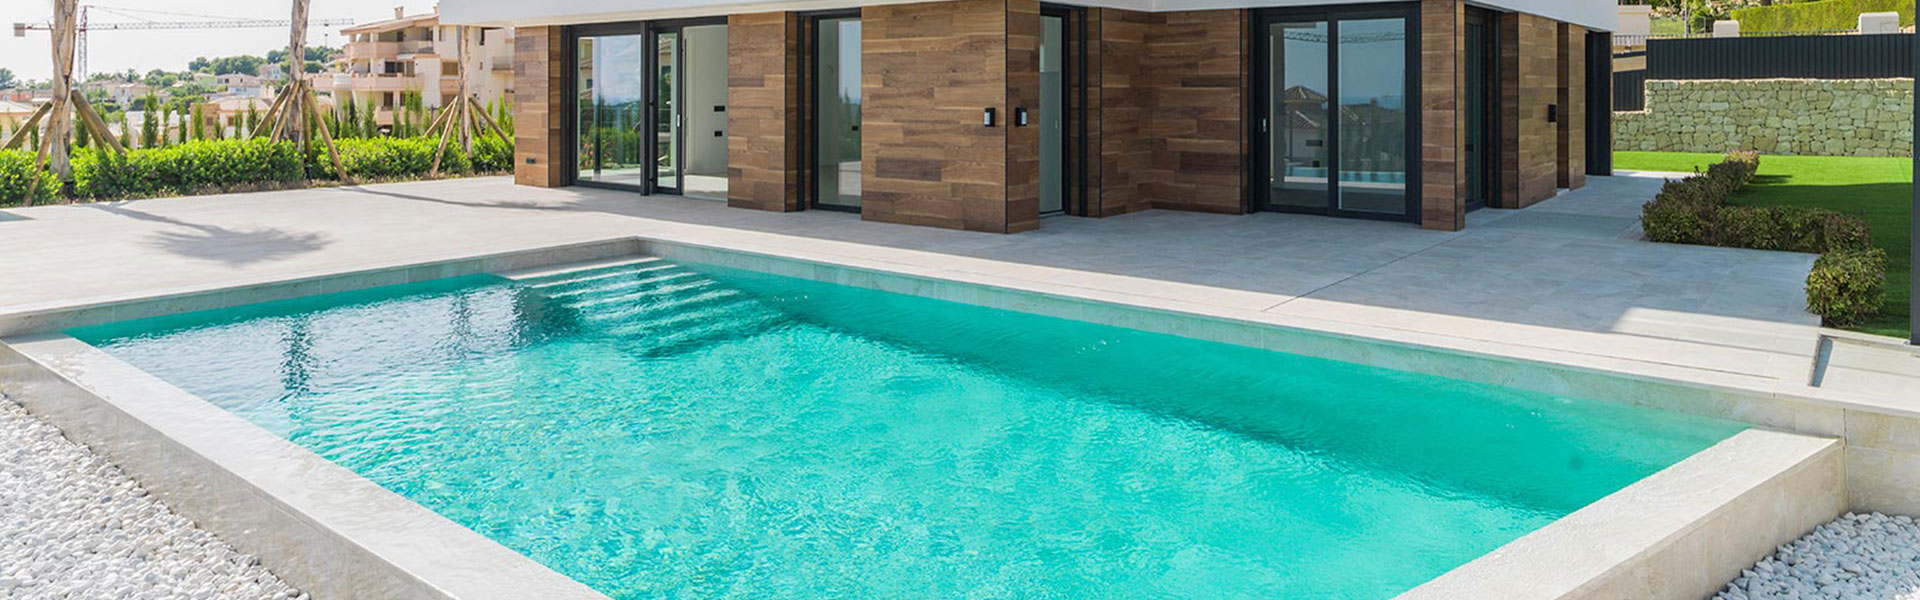 Pool Insulation